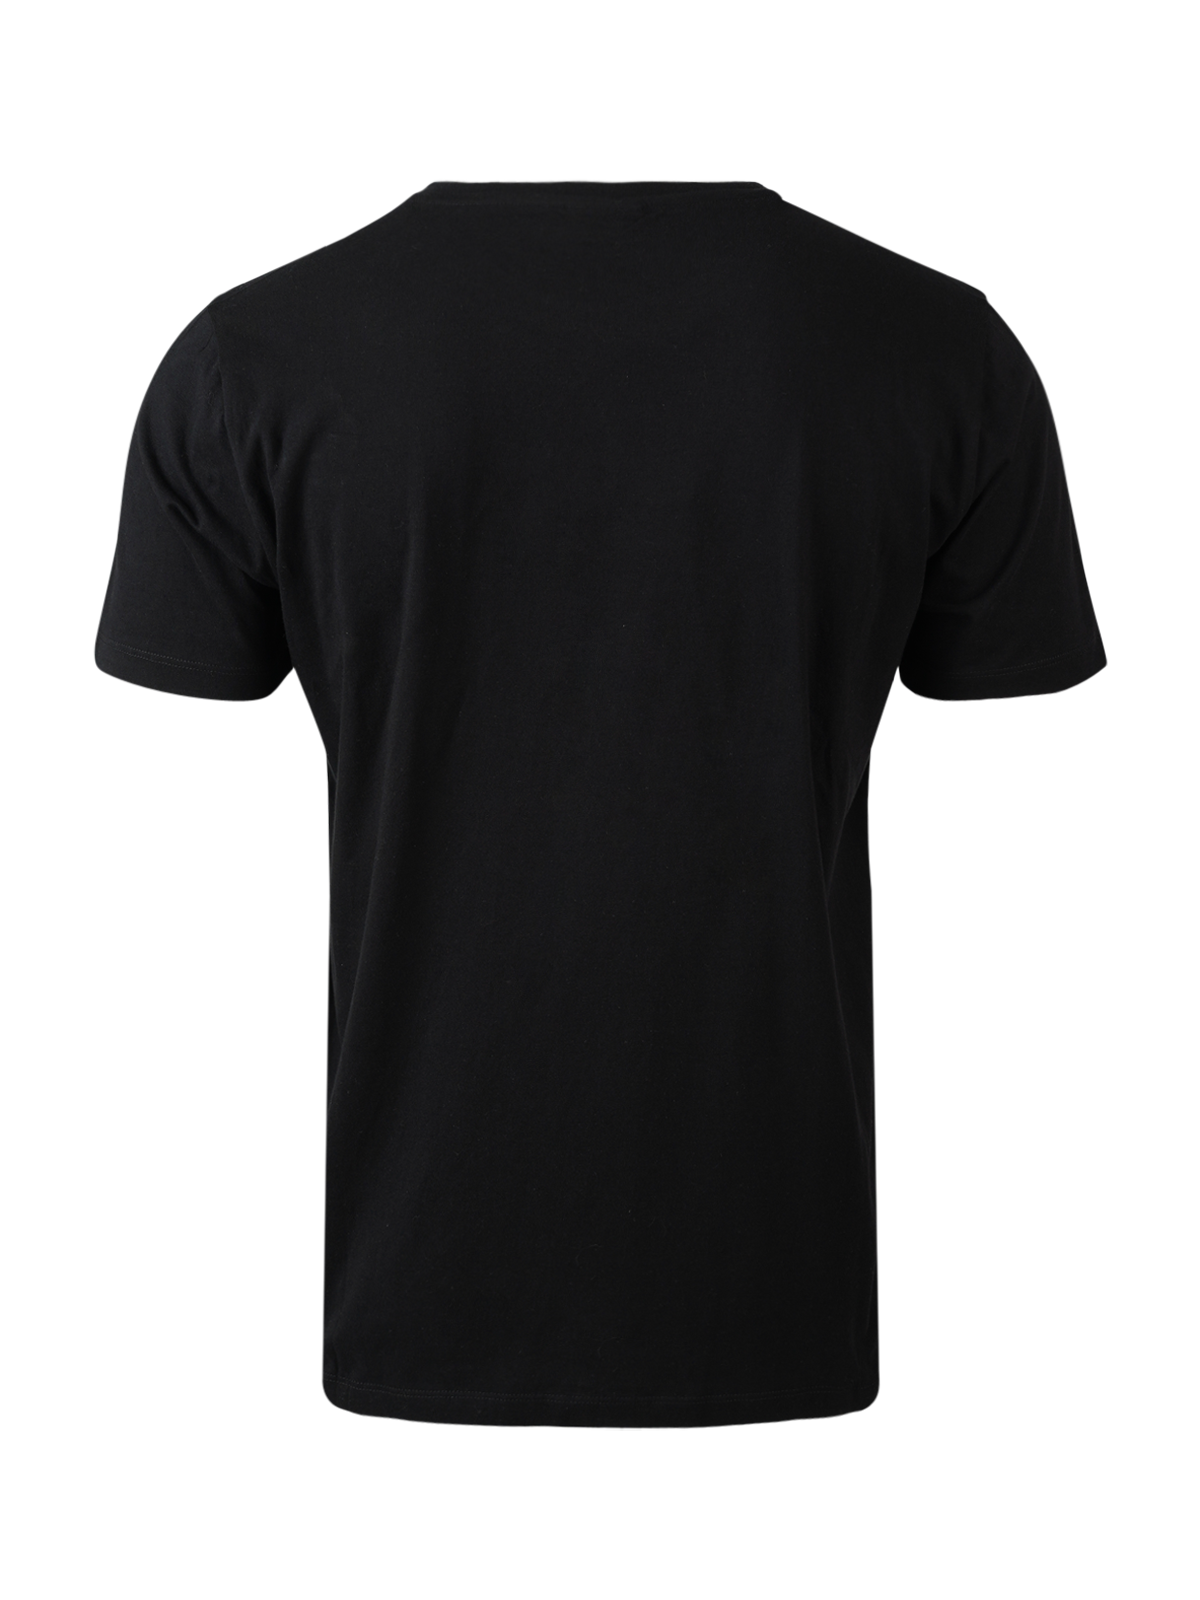 Axle-N Herren T-Shirt | Schwarz
